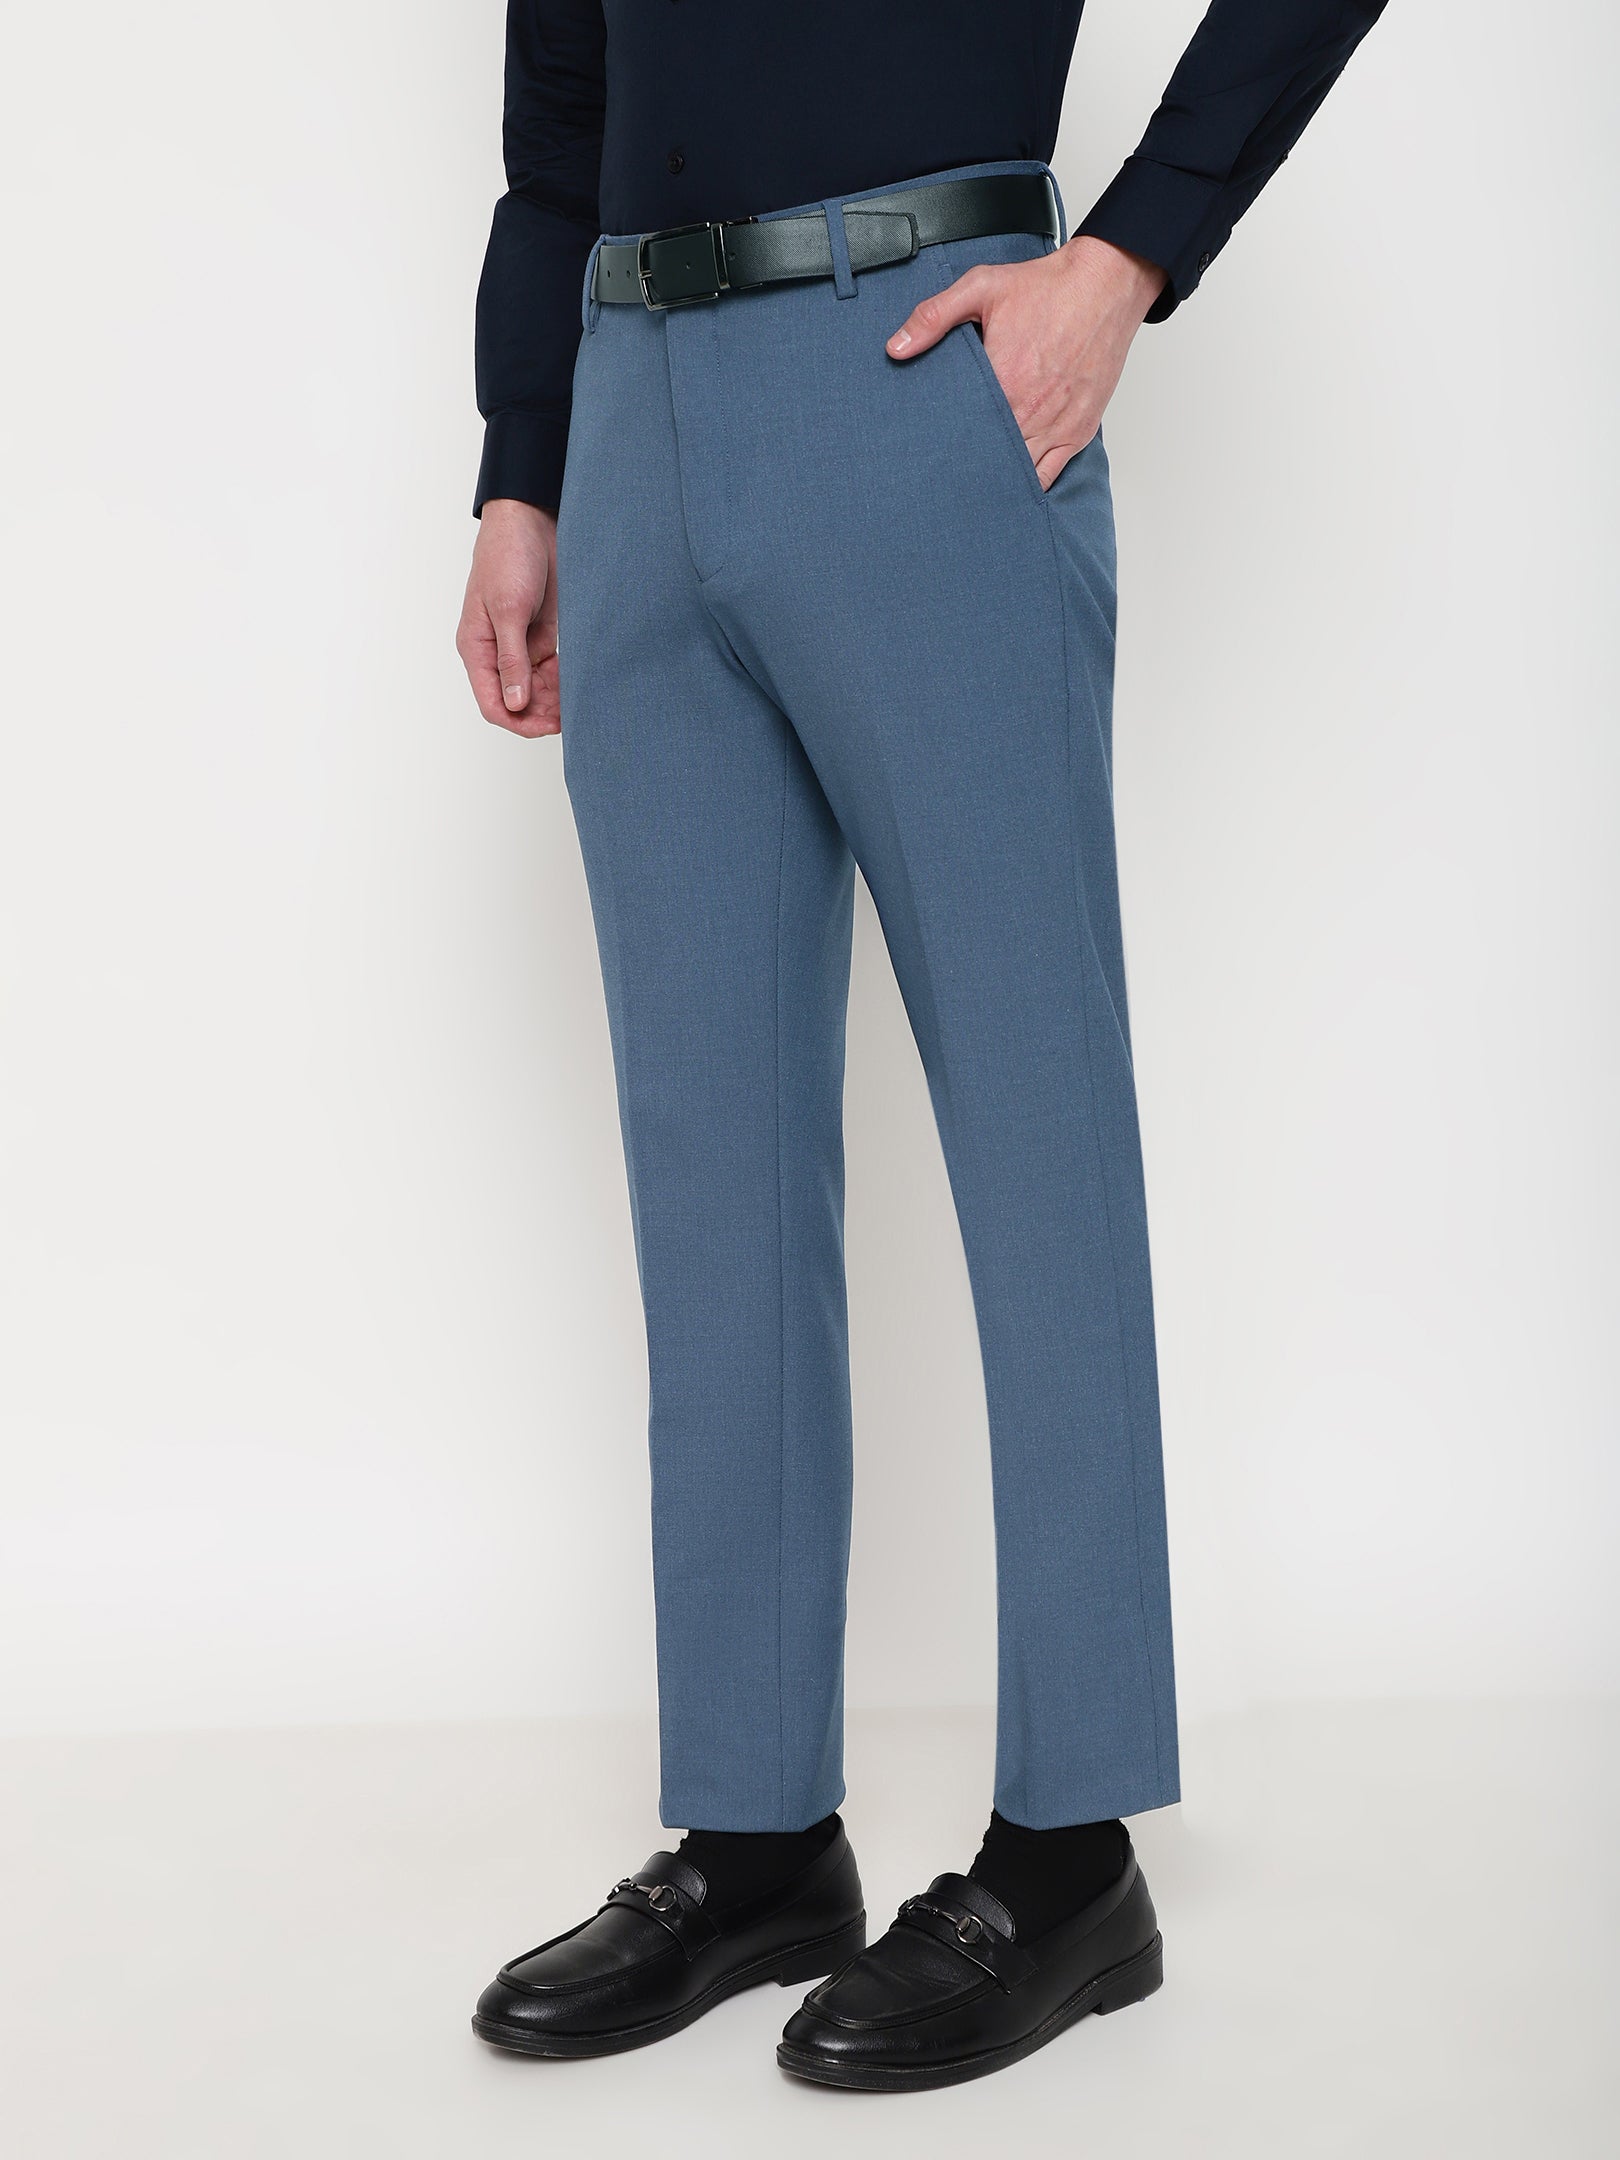 Cotton Chinos Gabardine Pant For Men - Royal Blue - NZ-3134